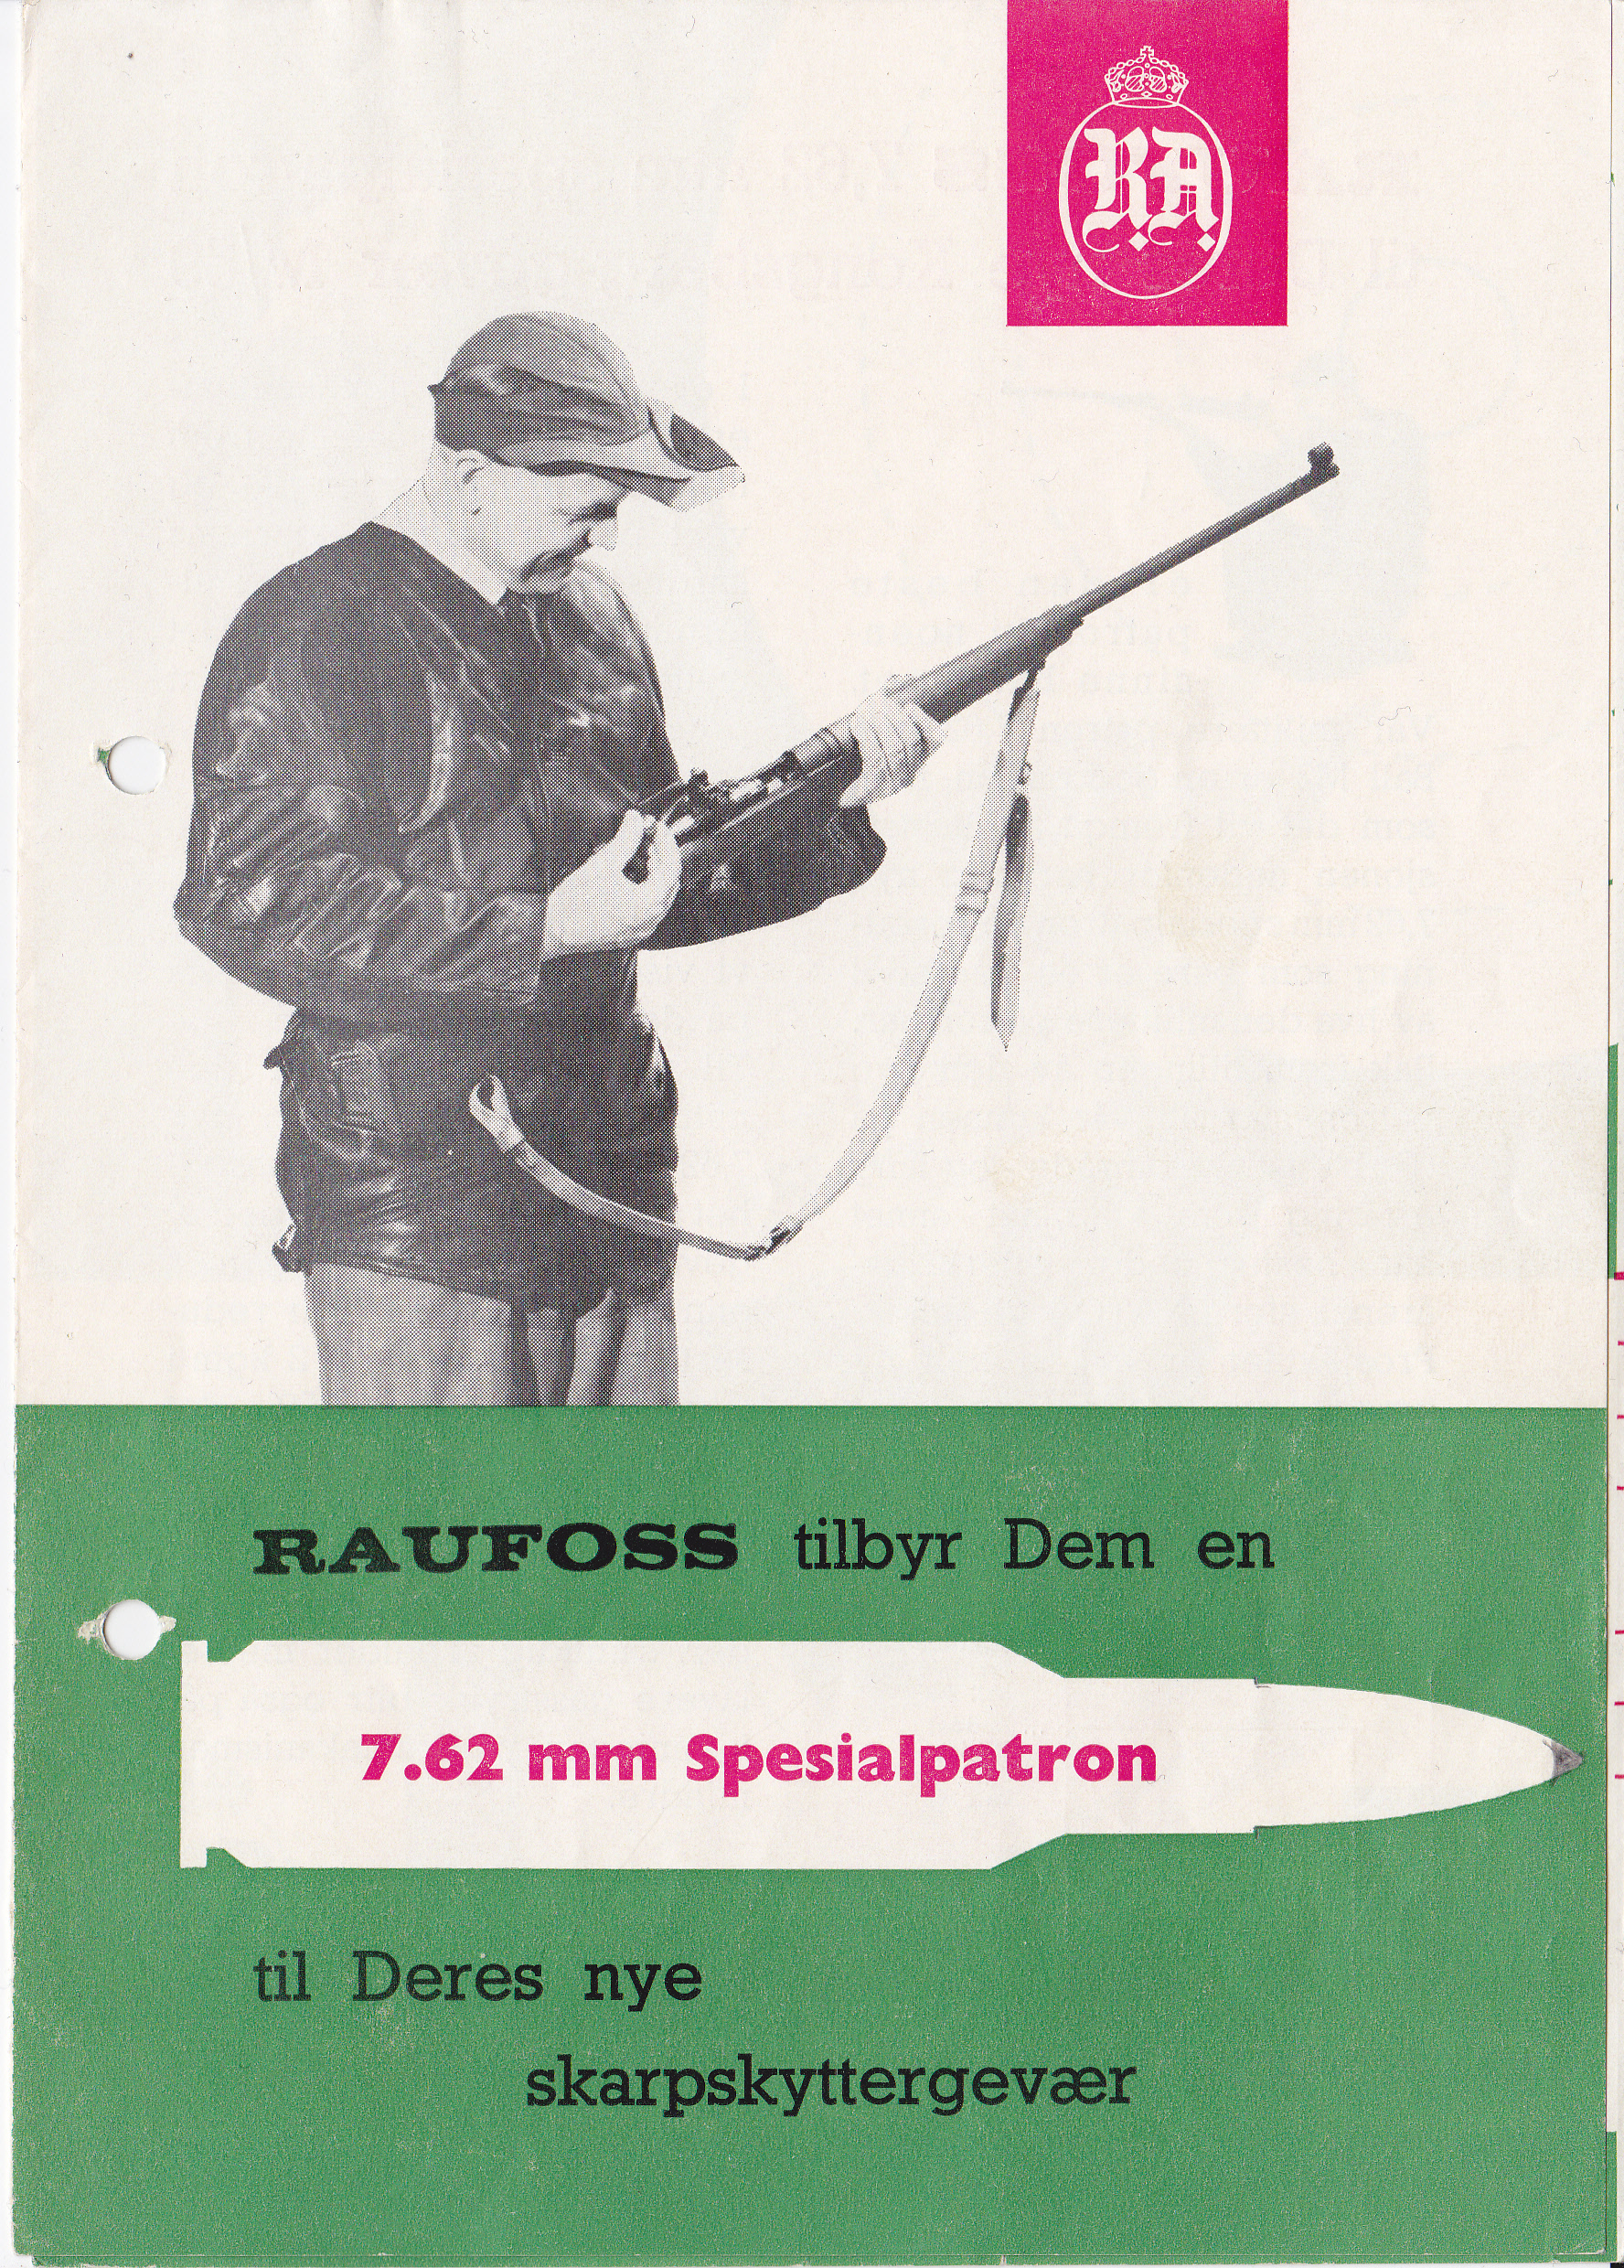 ./guns/rifle/bilder/Rifle-Kongsberg-Mauser-M59-Ammo-1.jpg